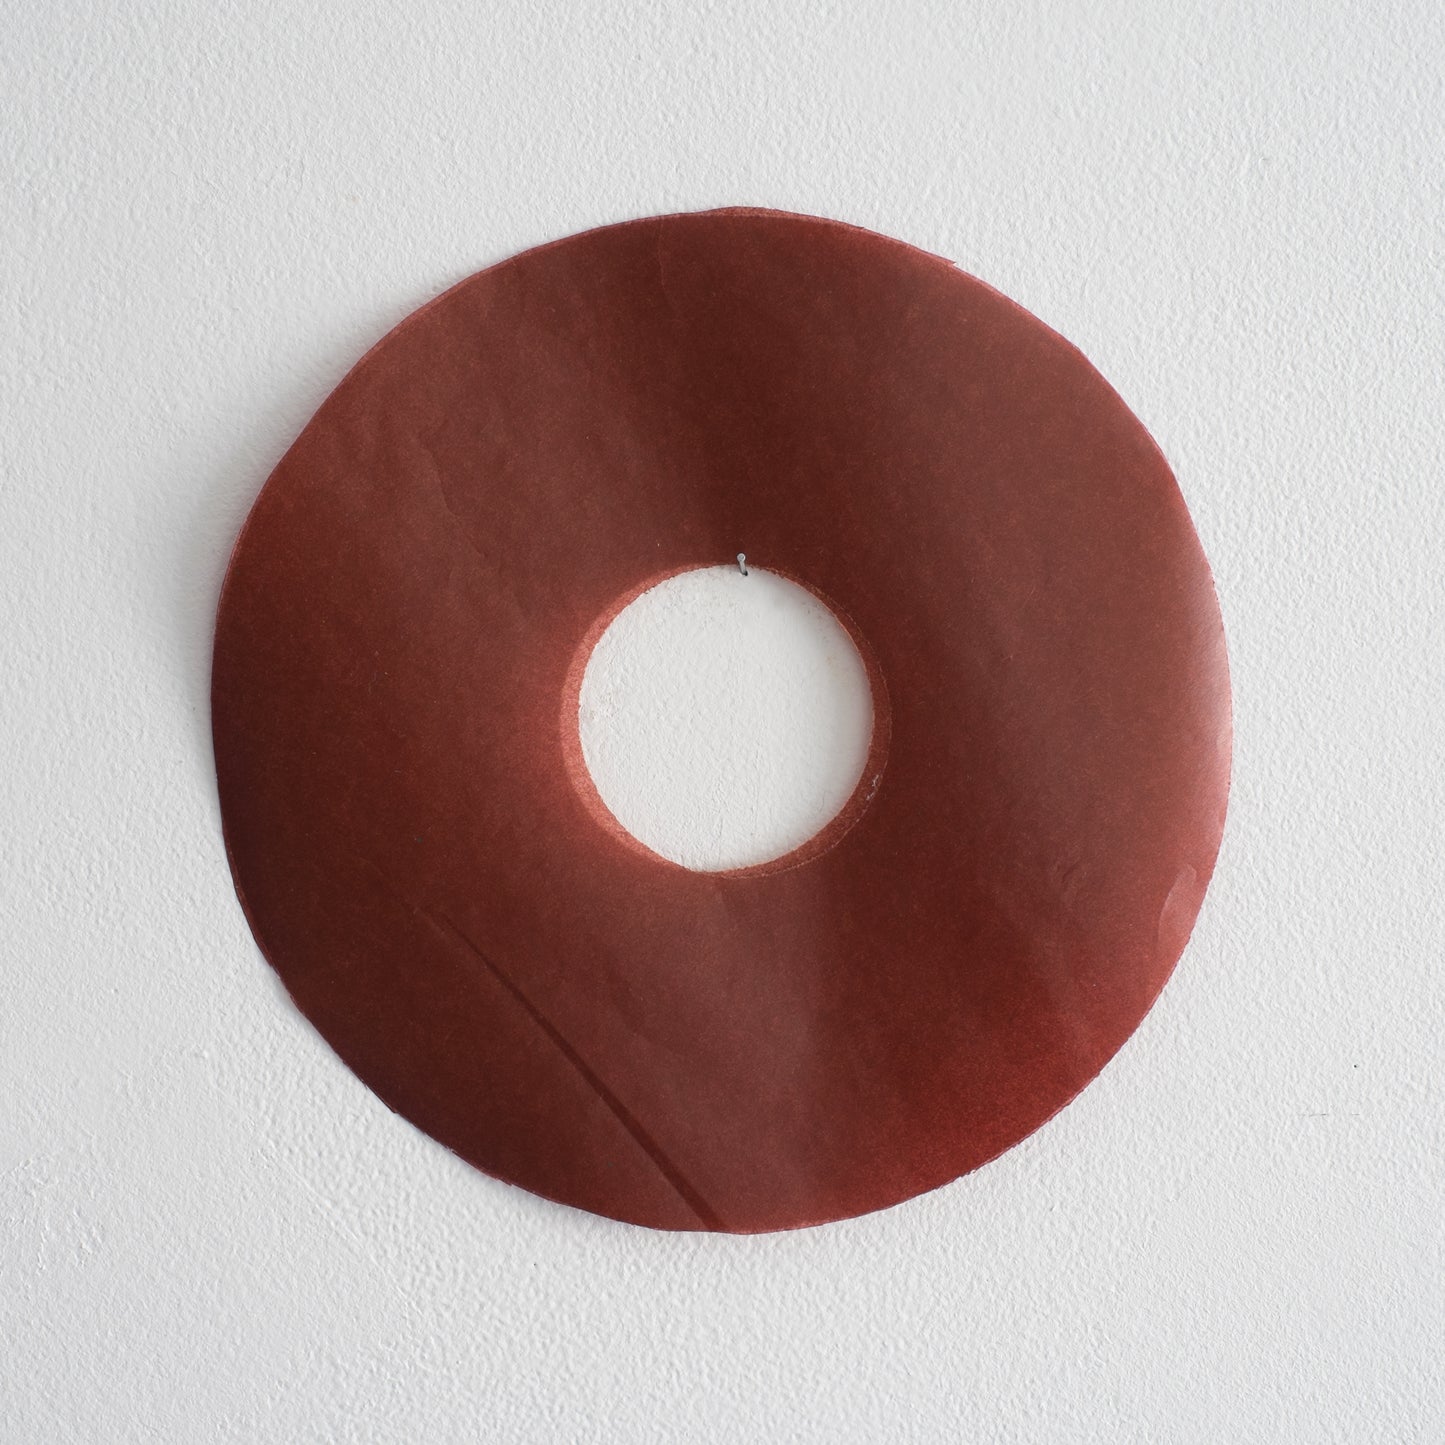 Circle of Love (Marrom wax paper) by Kai Chan